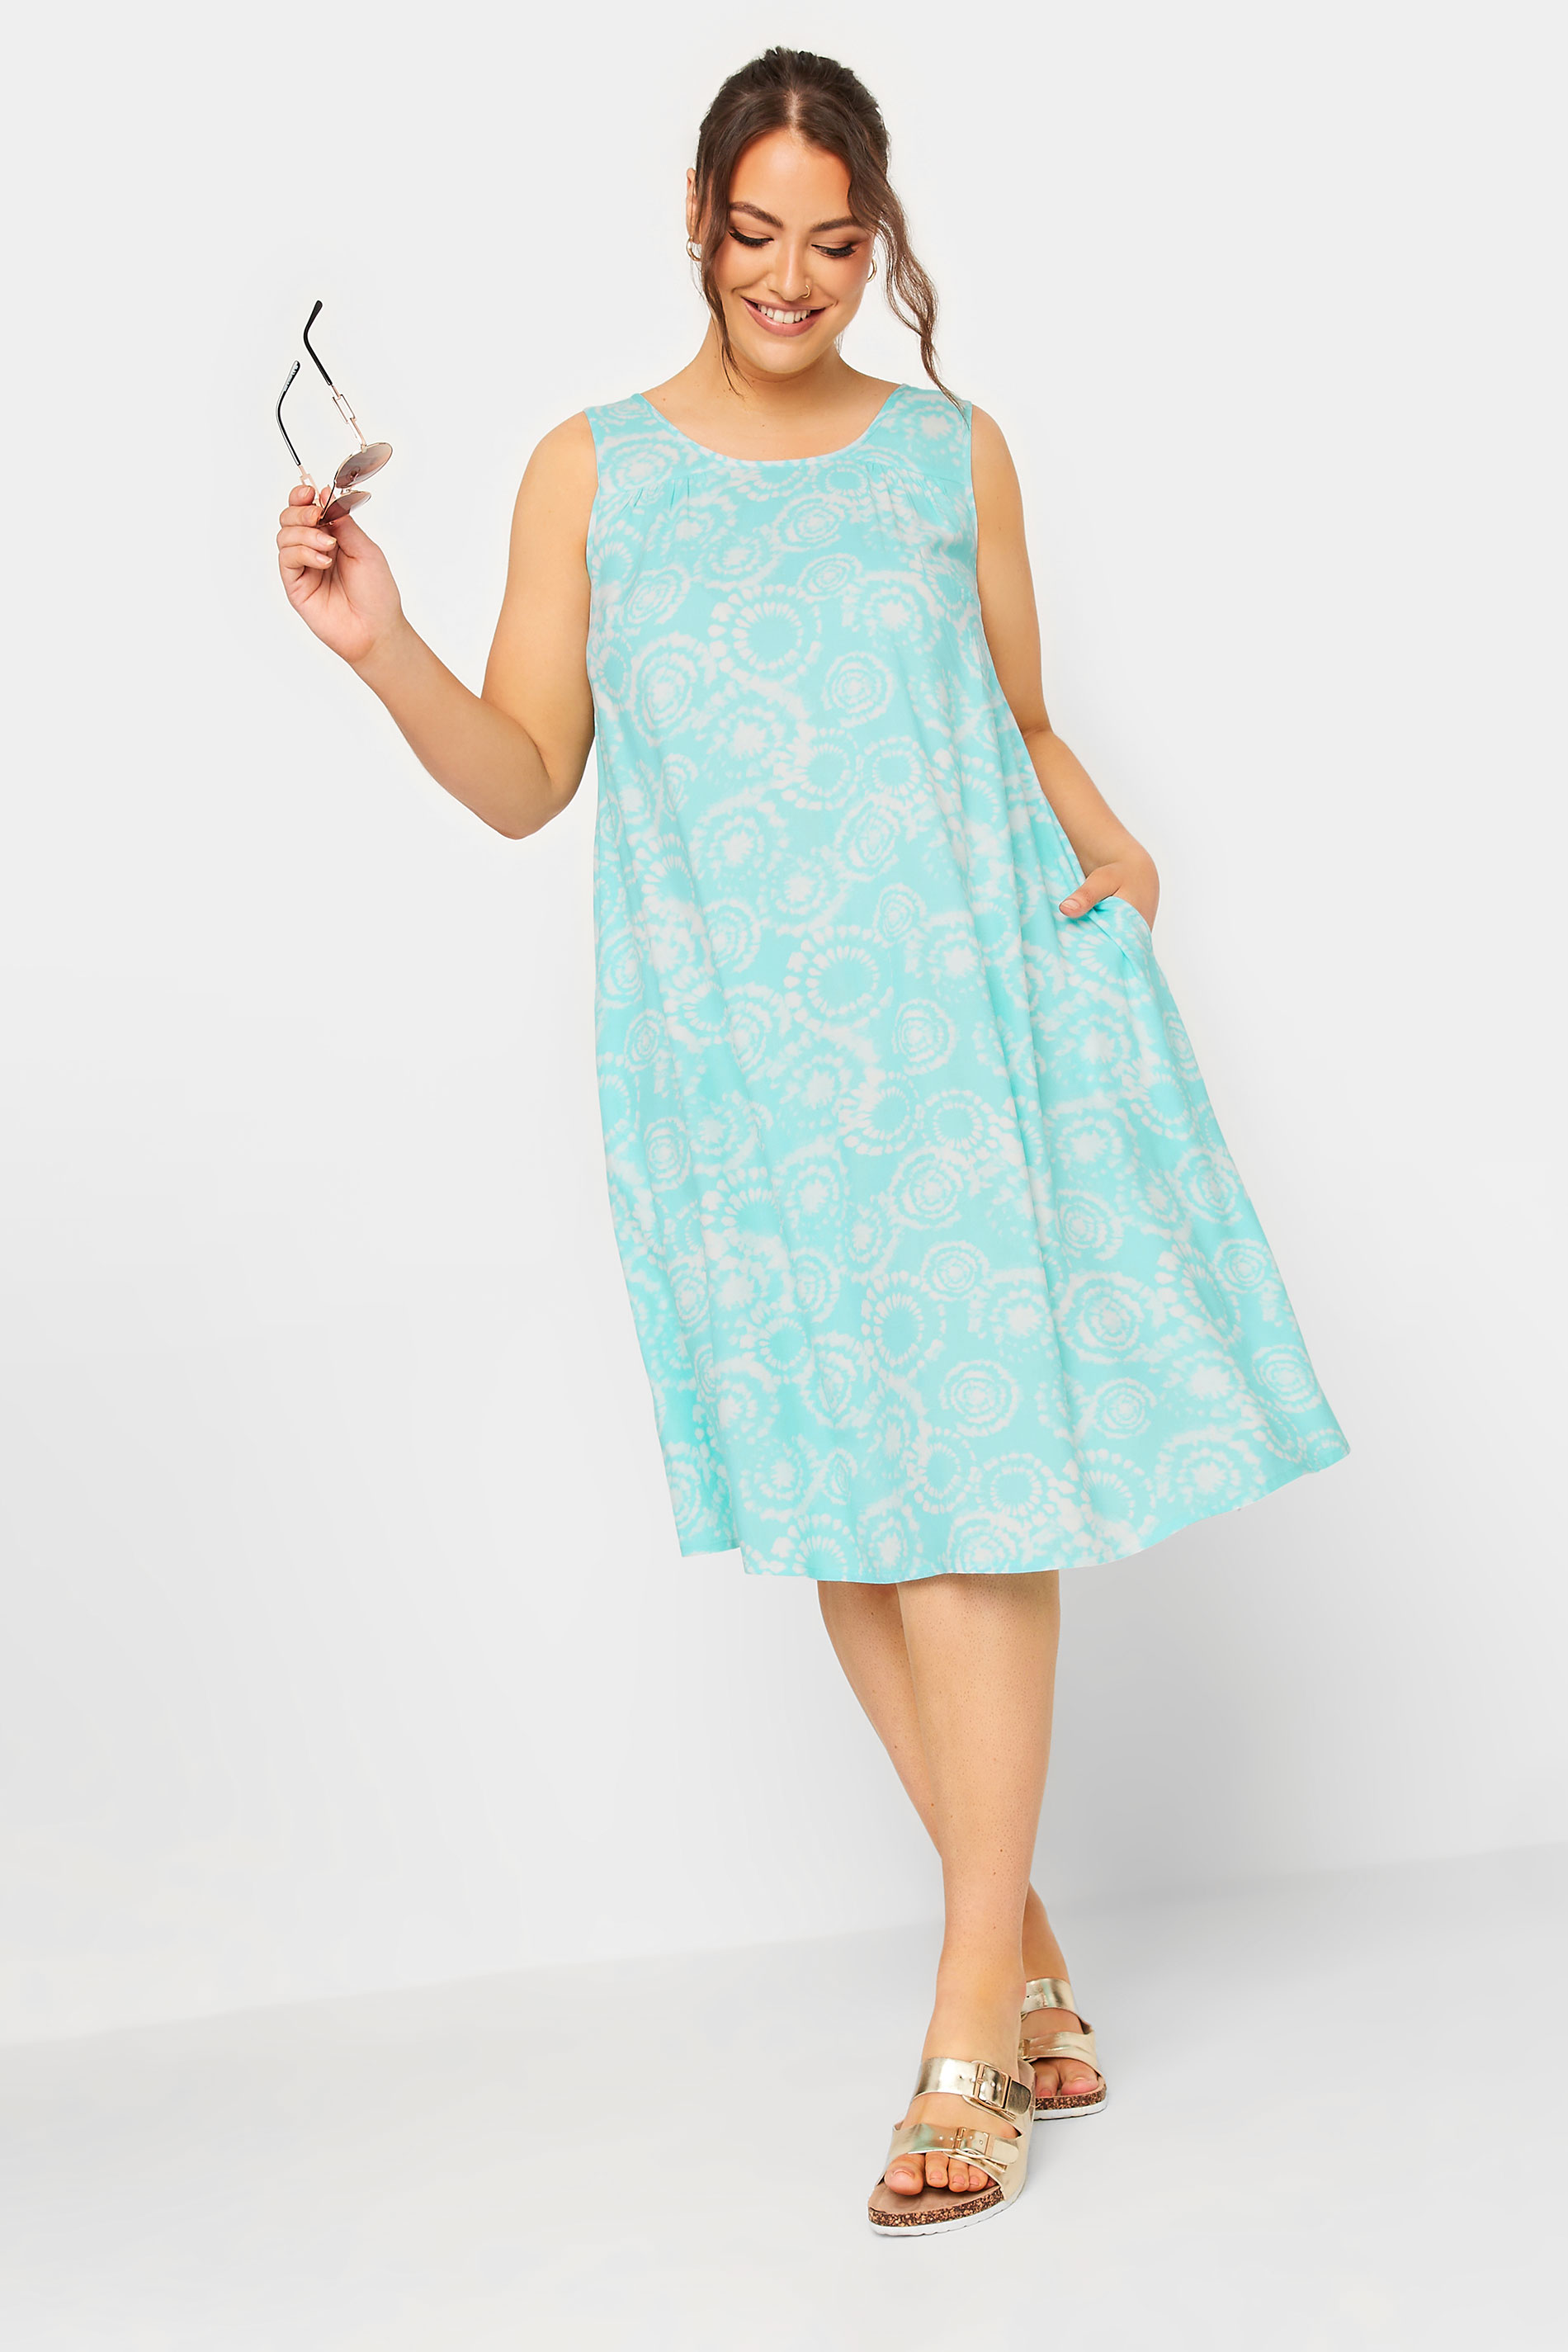 YOURS Plus Size Aqua Blue Tie Dye Print Swing Dress | Yours Clothing 1